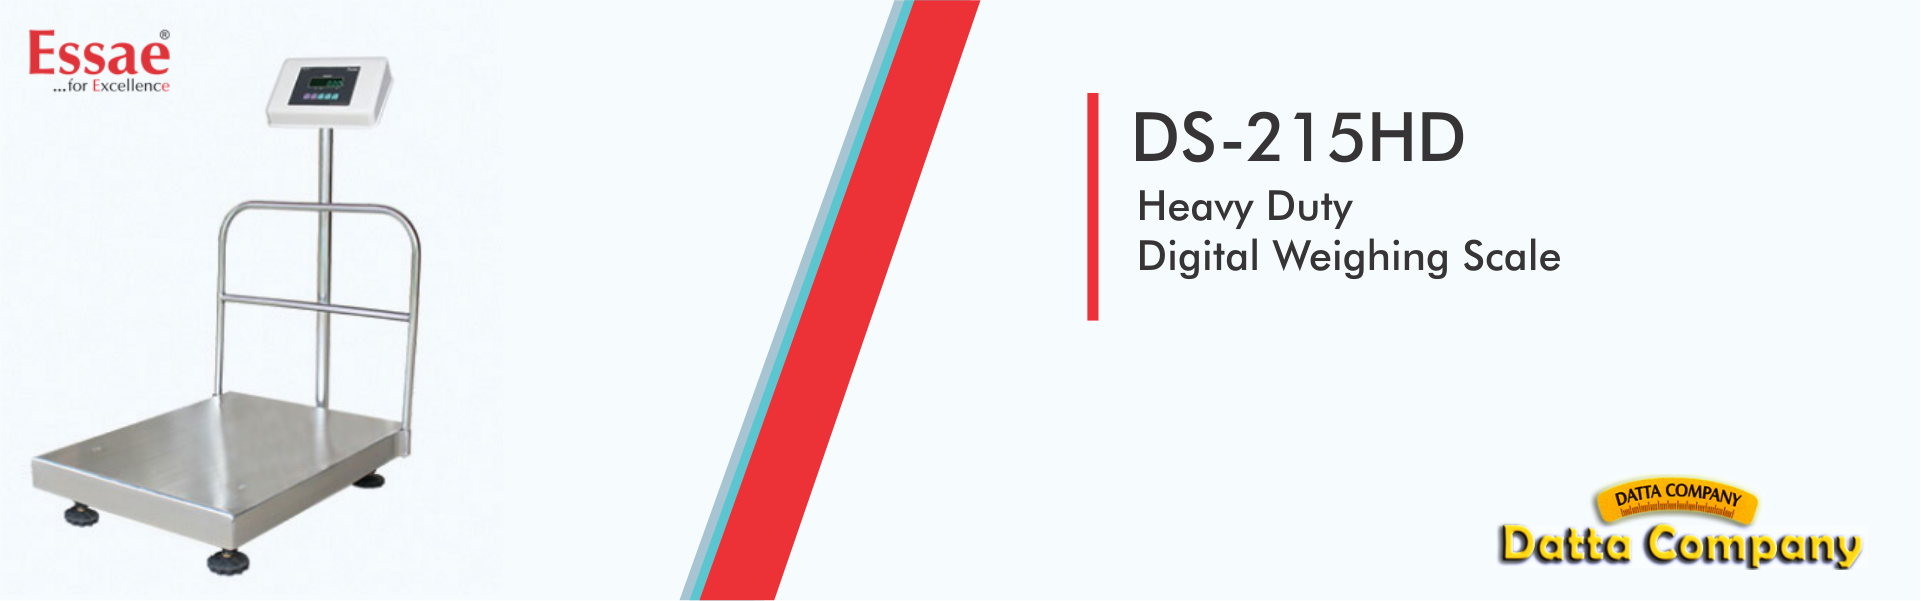 DS-215HD Heavy Duty Digital Weighing Scale